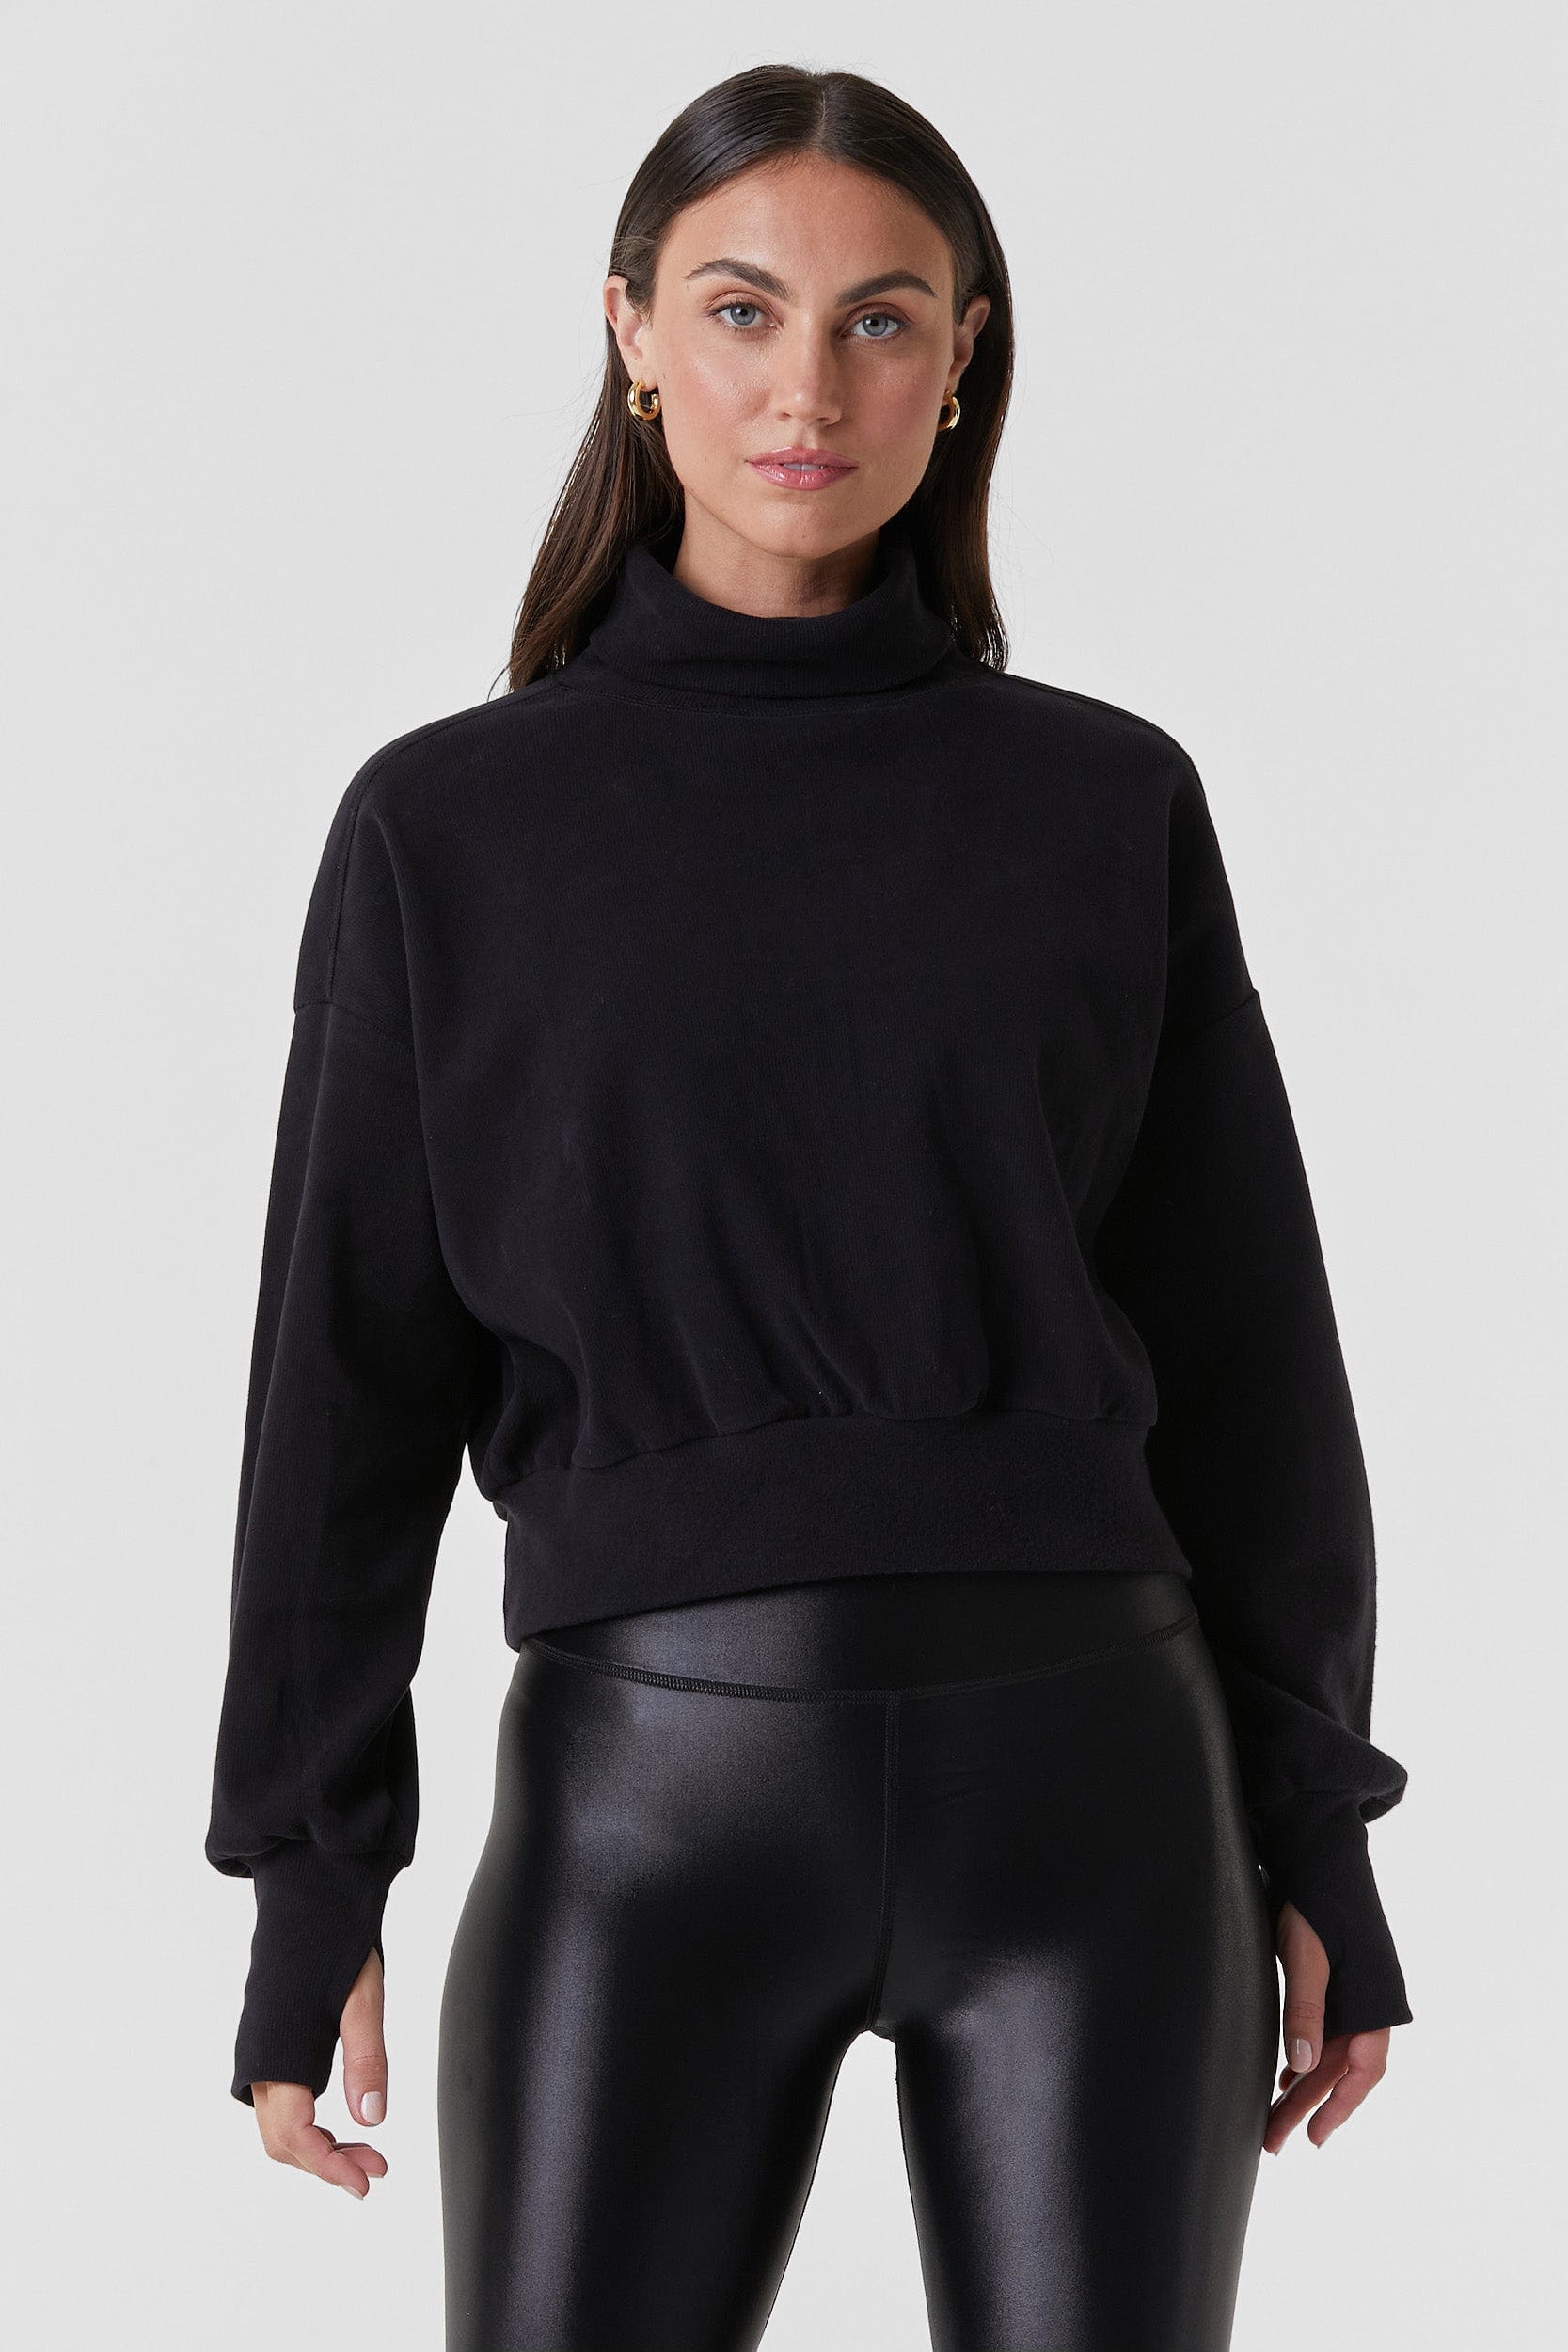 Allure Sweater - Black